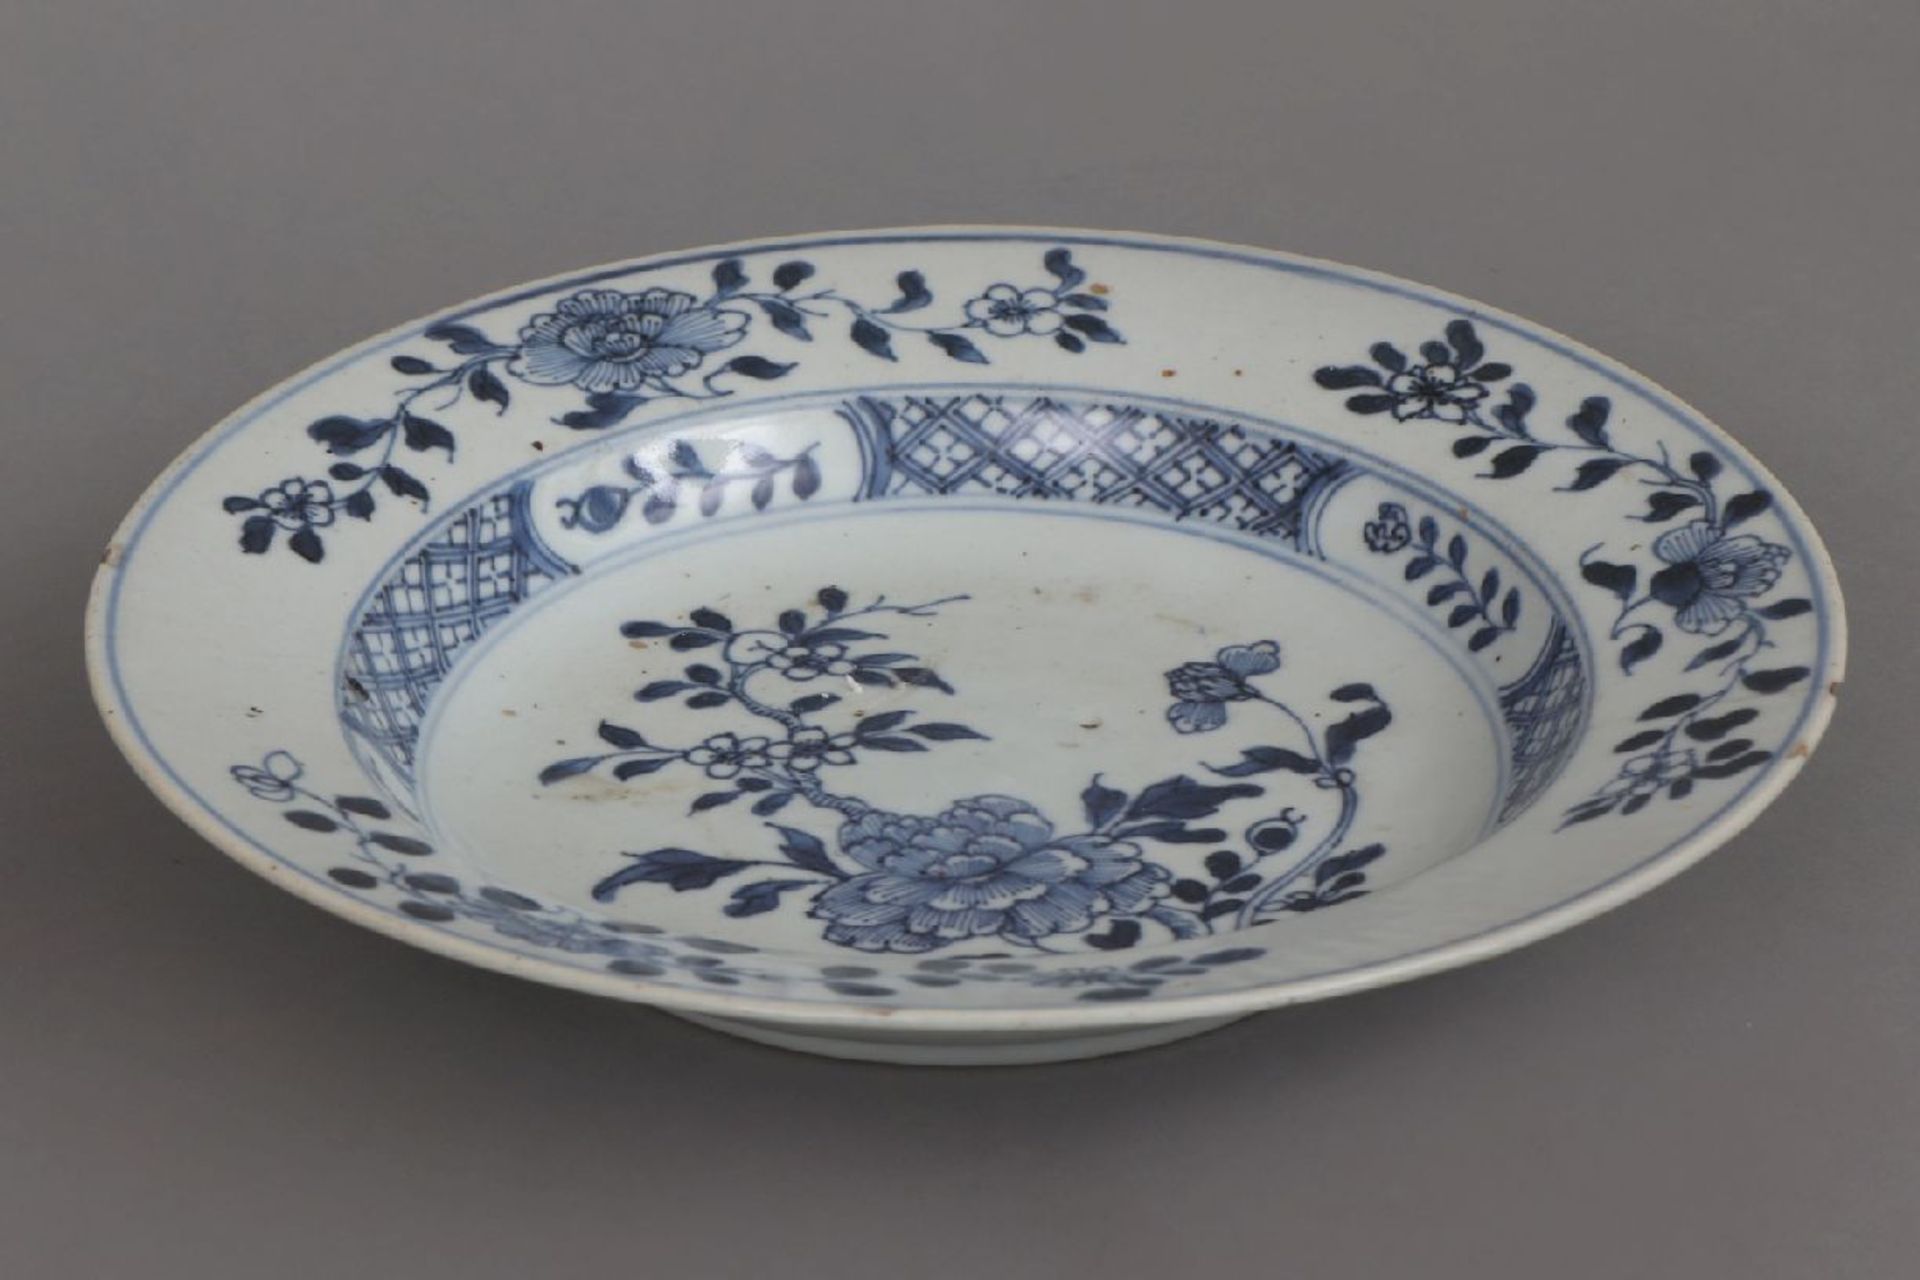 Chinesischer Teller mit Blaumalereiwohl 17./18. Jahrhundert, runder, glatter Teller, im Spiegel - Image 5 of 6